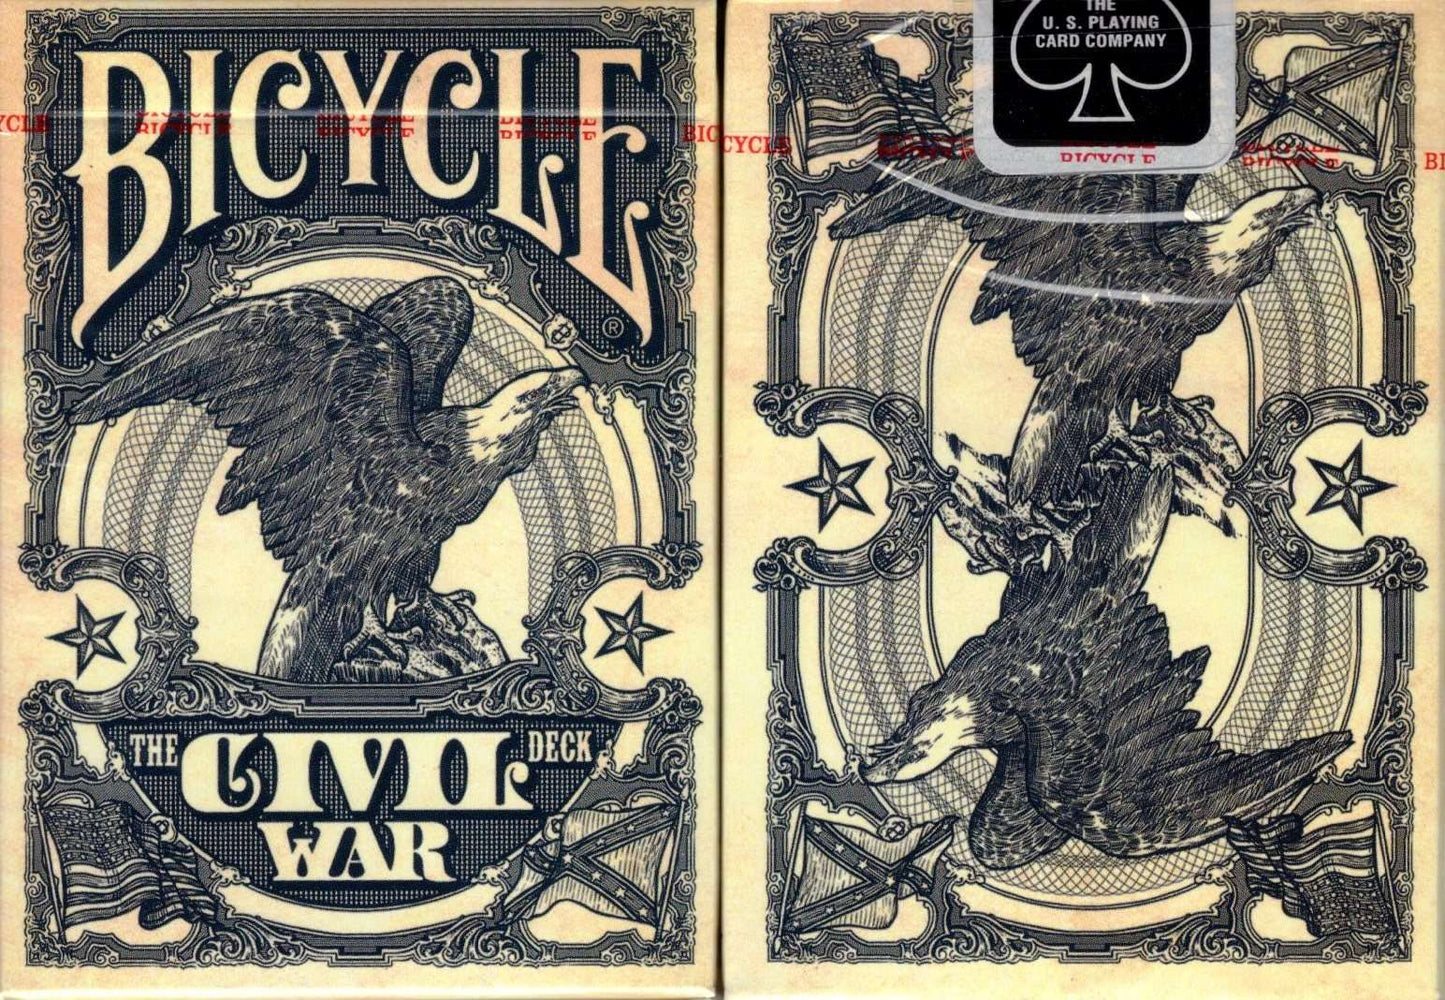 PlayingCardDecks.com-Civil War Blue Bicycle Playing Cards